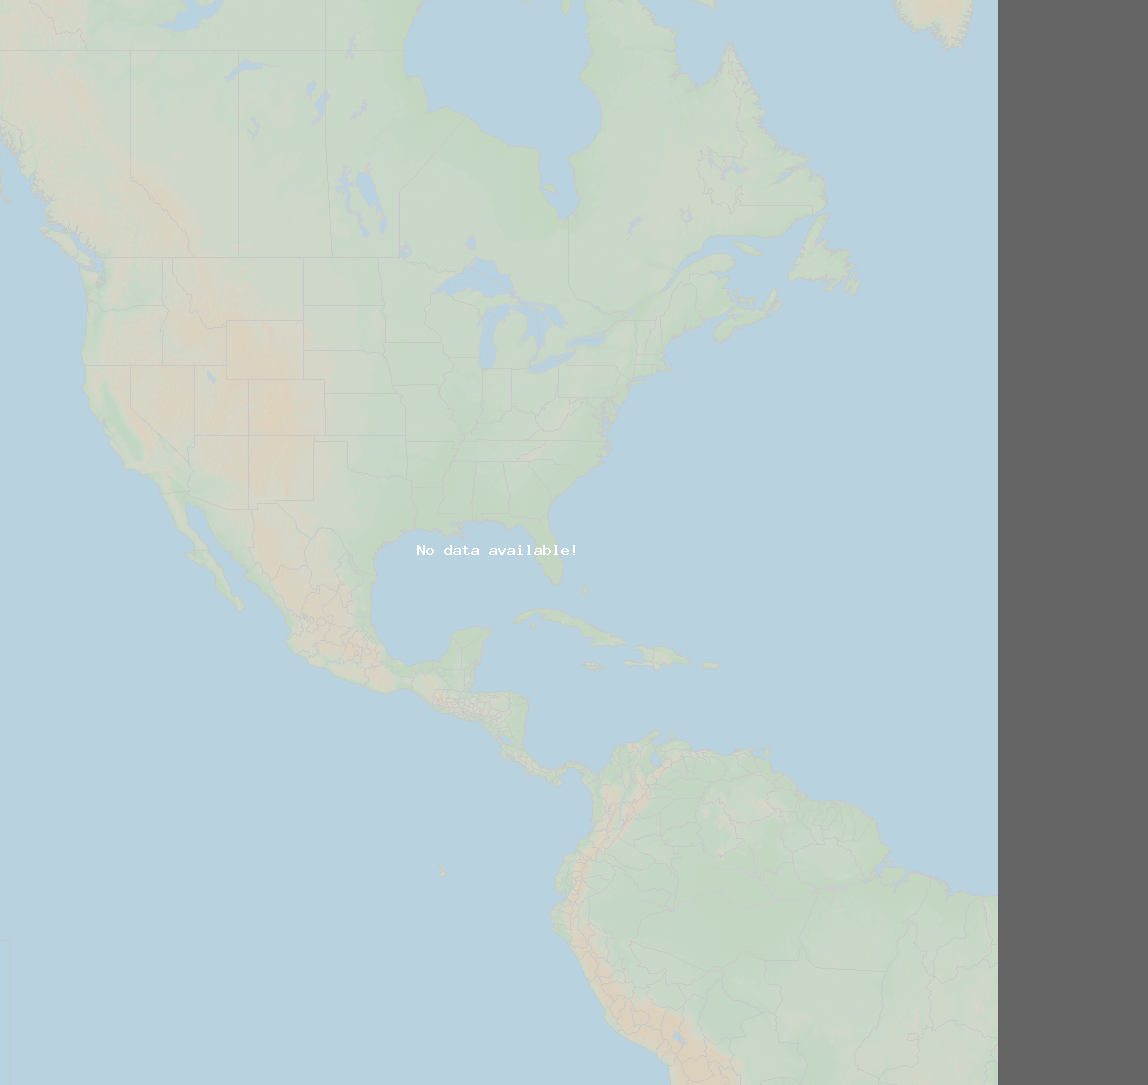 Andel blixtar (Station Haleakala) North America 2020 April